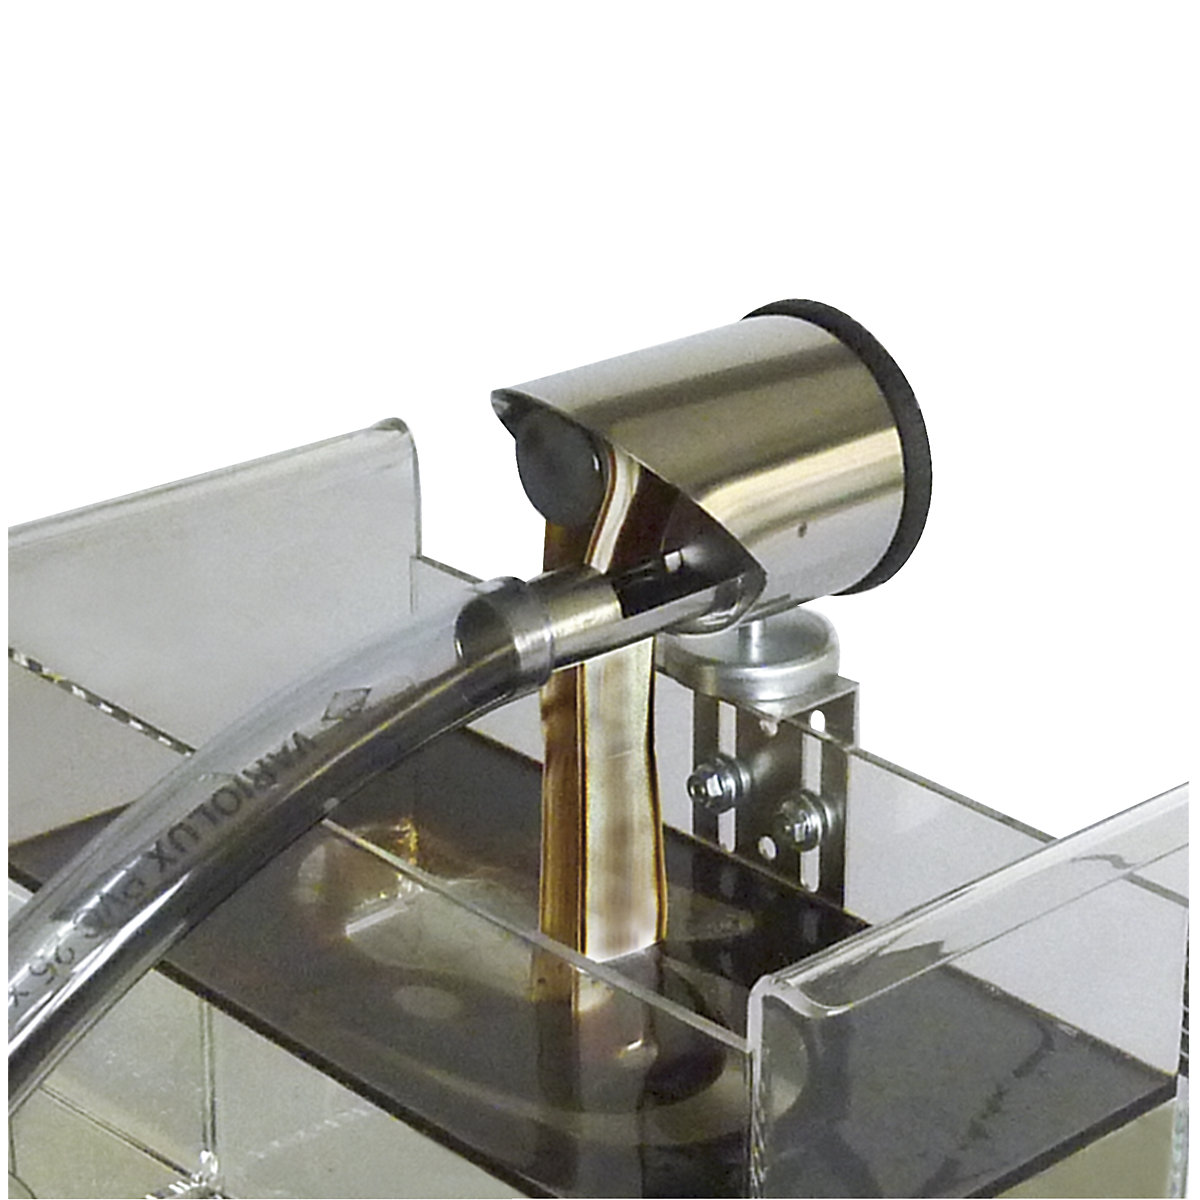 Band-olieskimmer met magneetvoet (Productafbeelding 6)-5